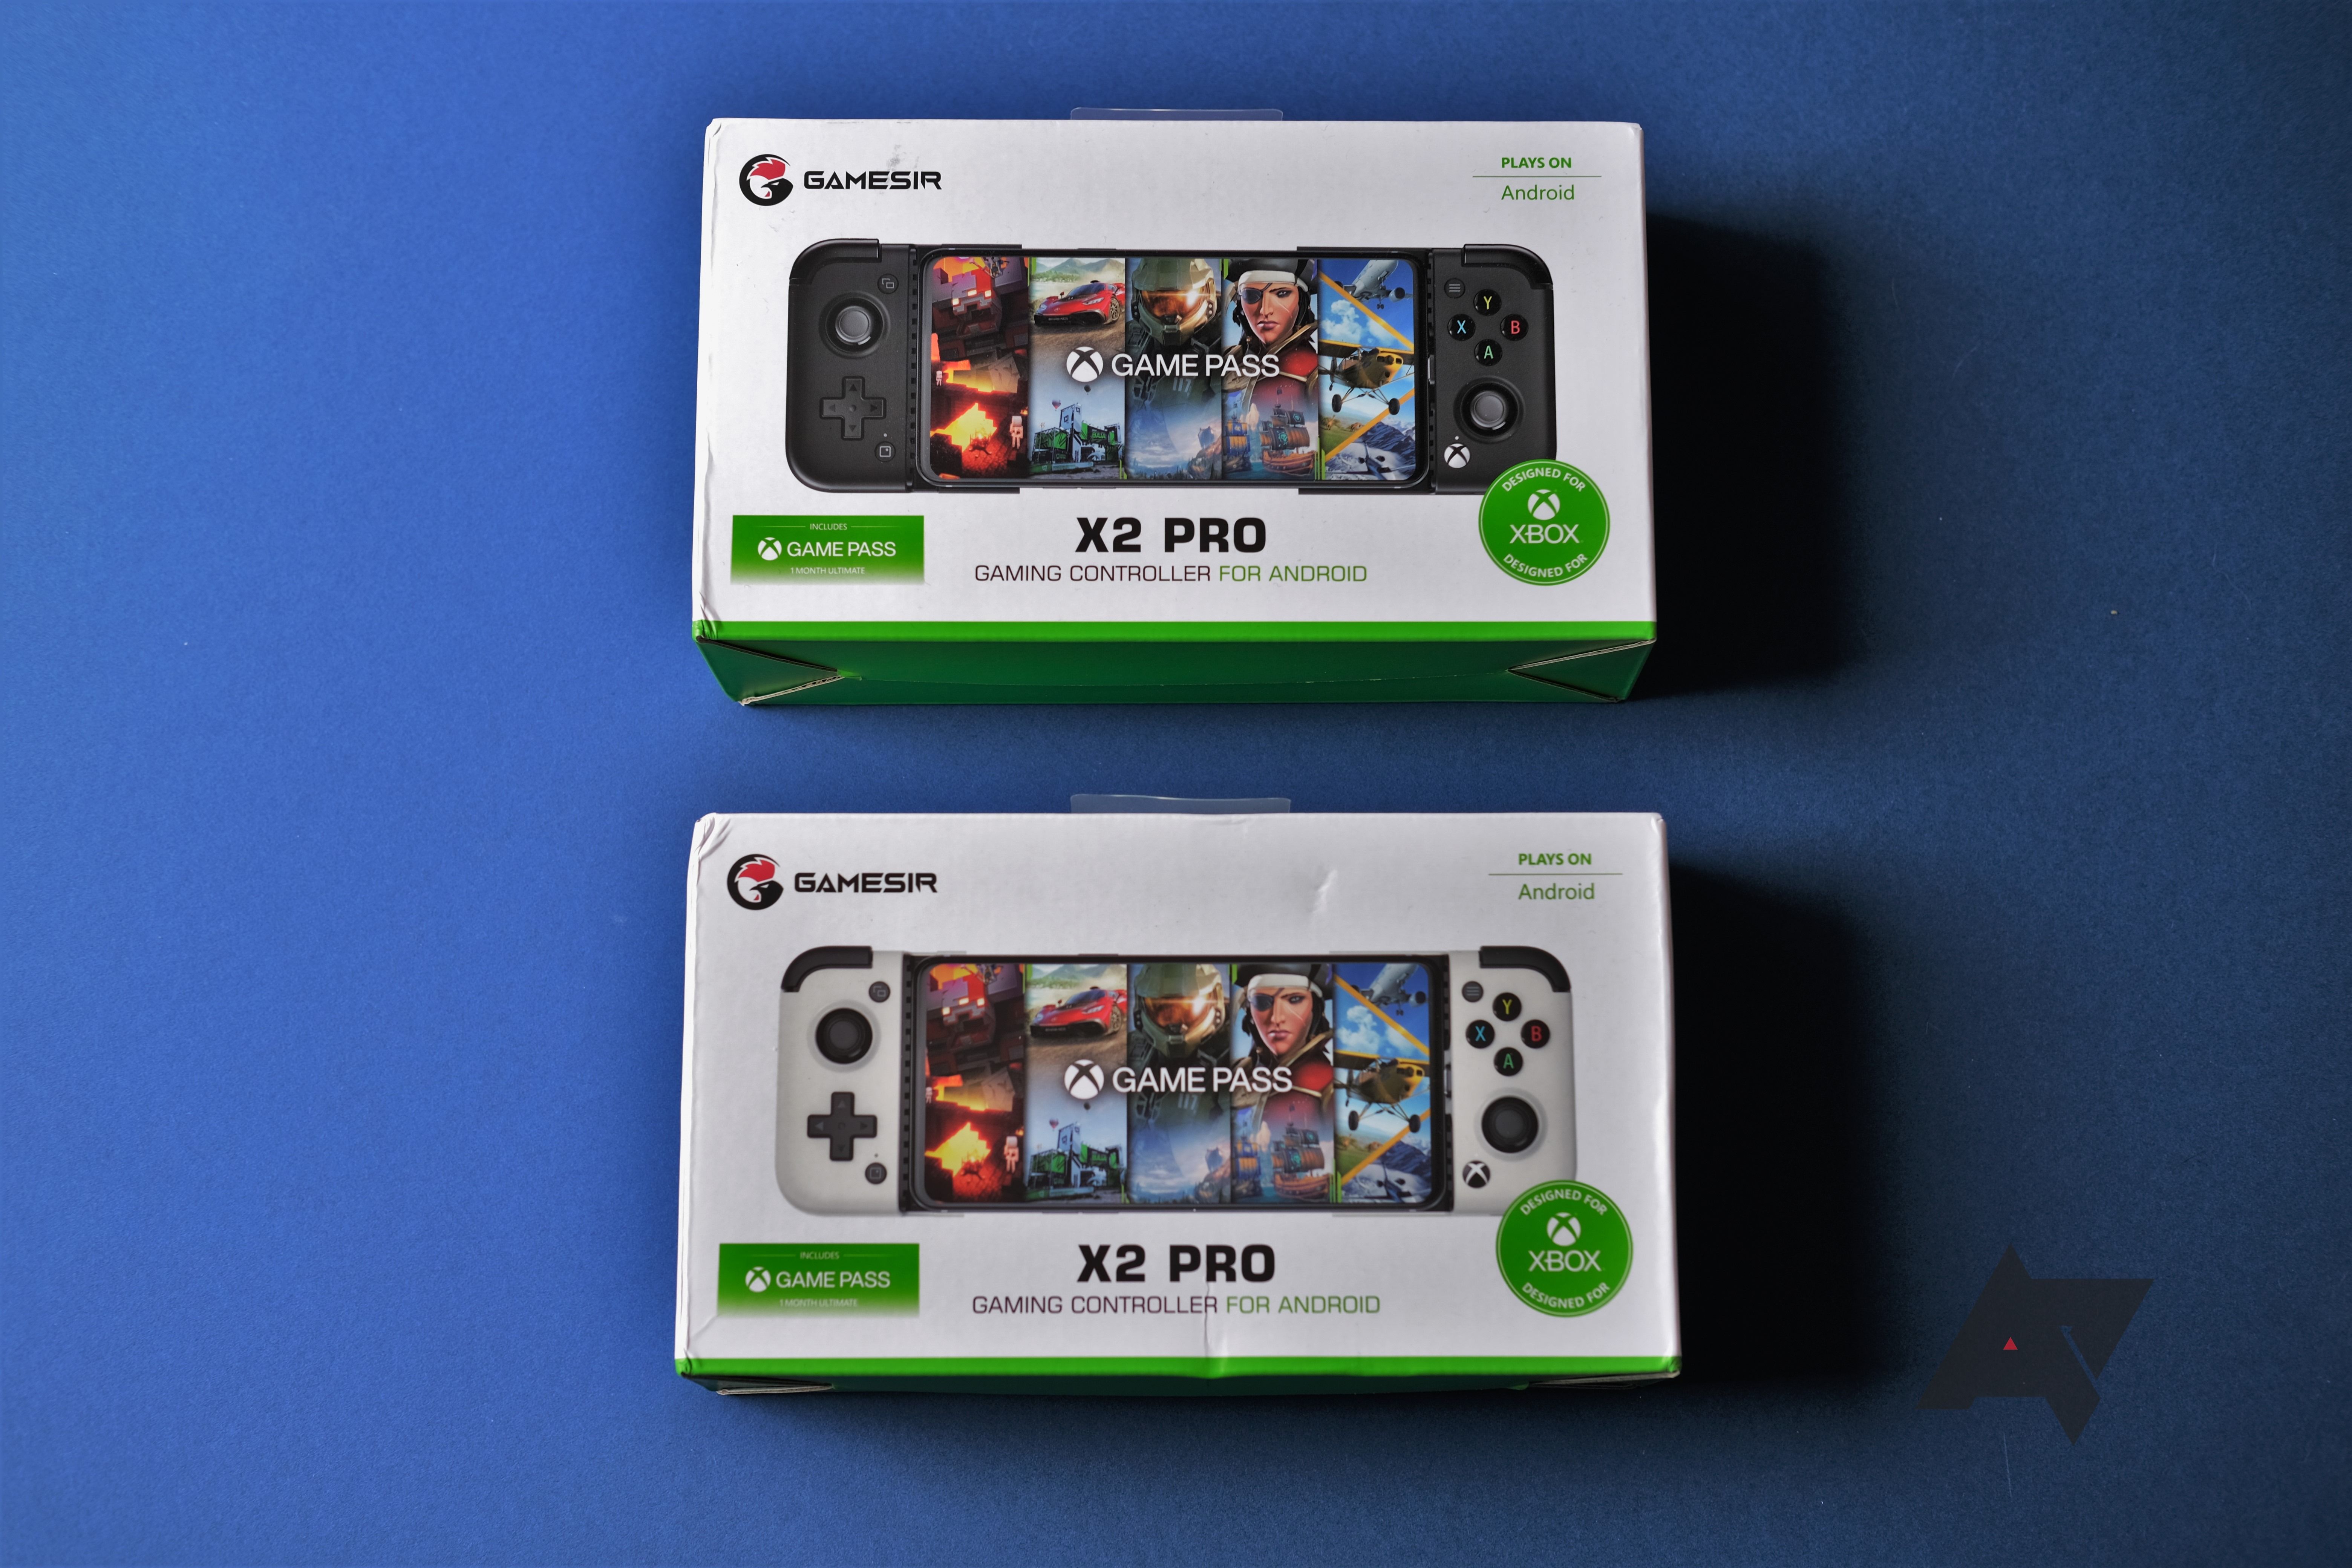 GameSir X2 Pro Hands-on Box